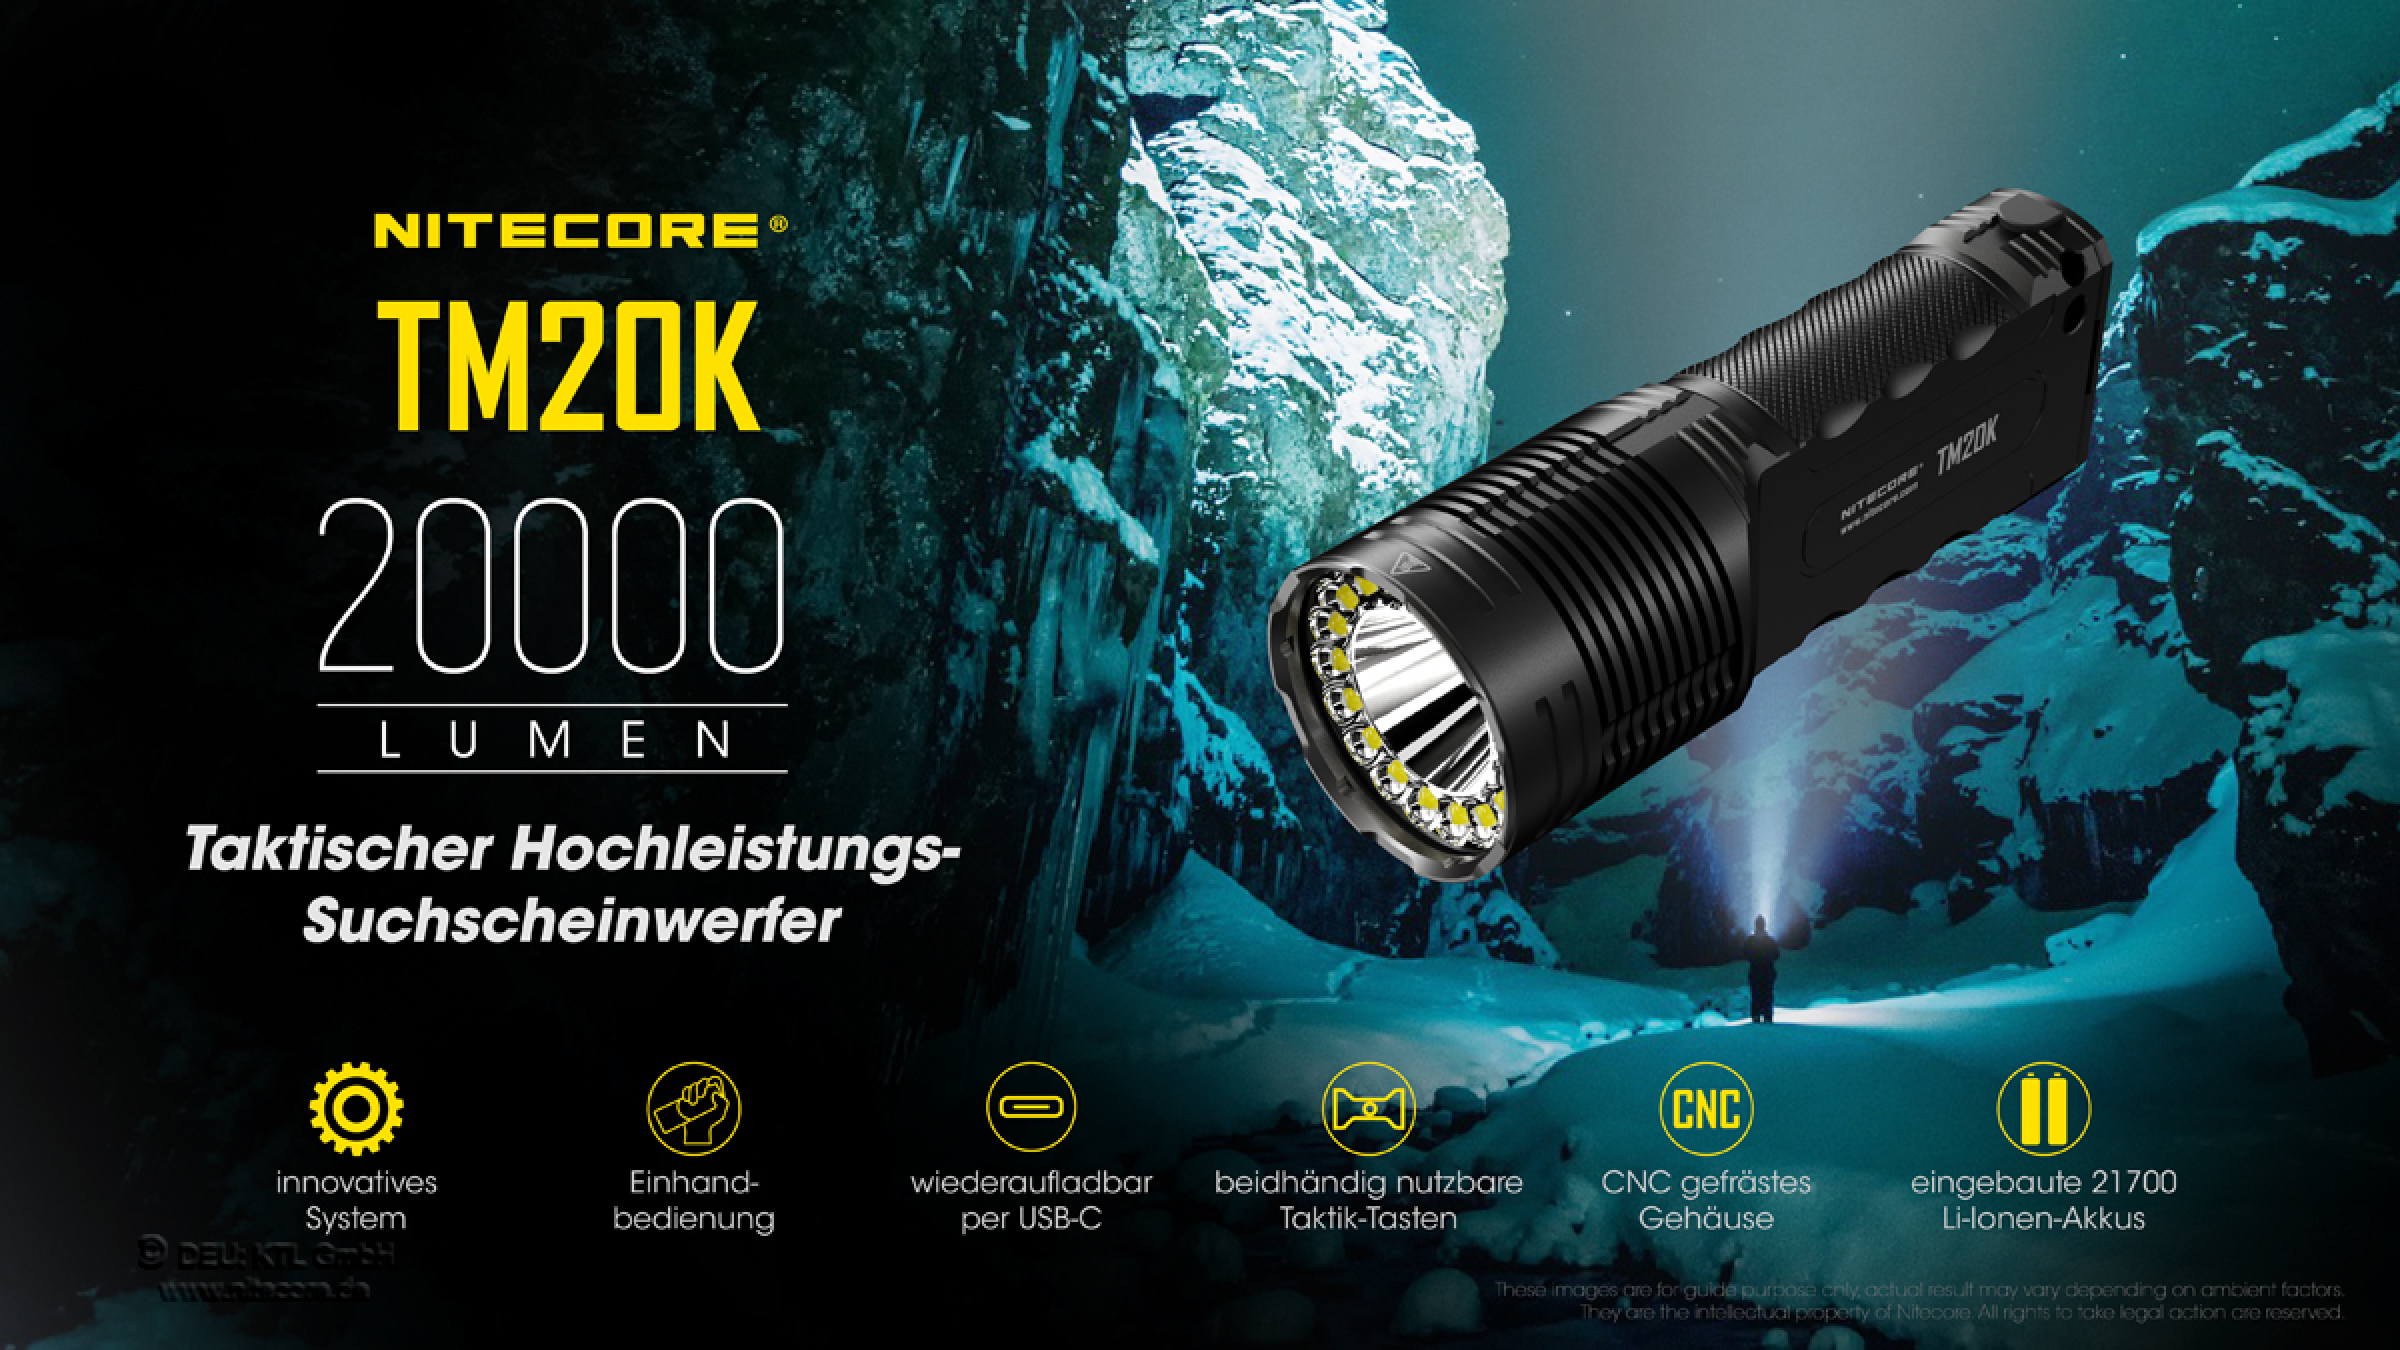 Nitecore Pro Torch TM20K - 20000 lumens incl. battery